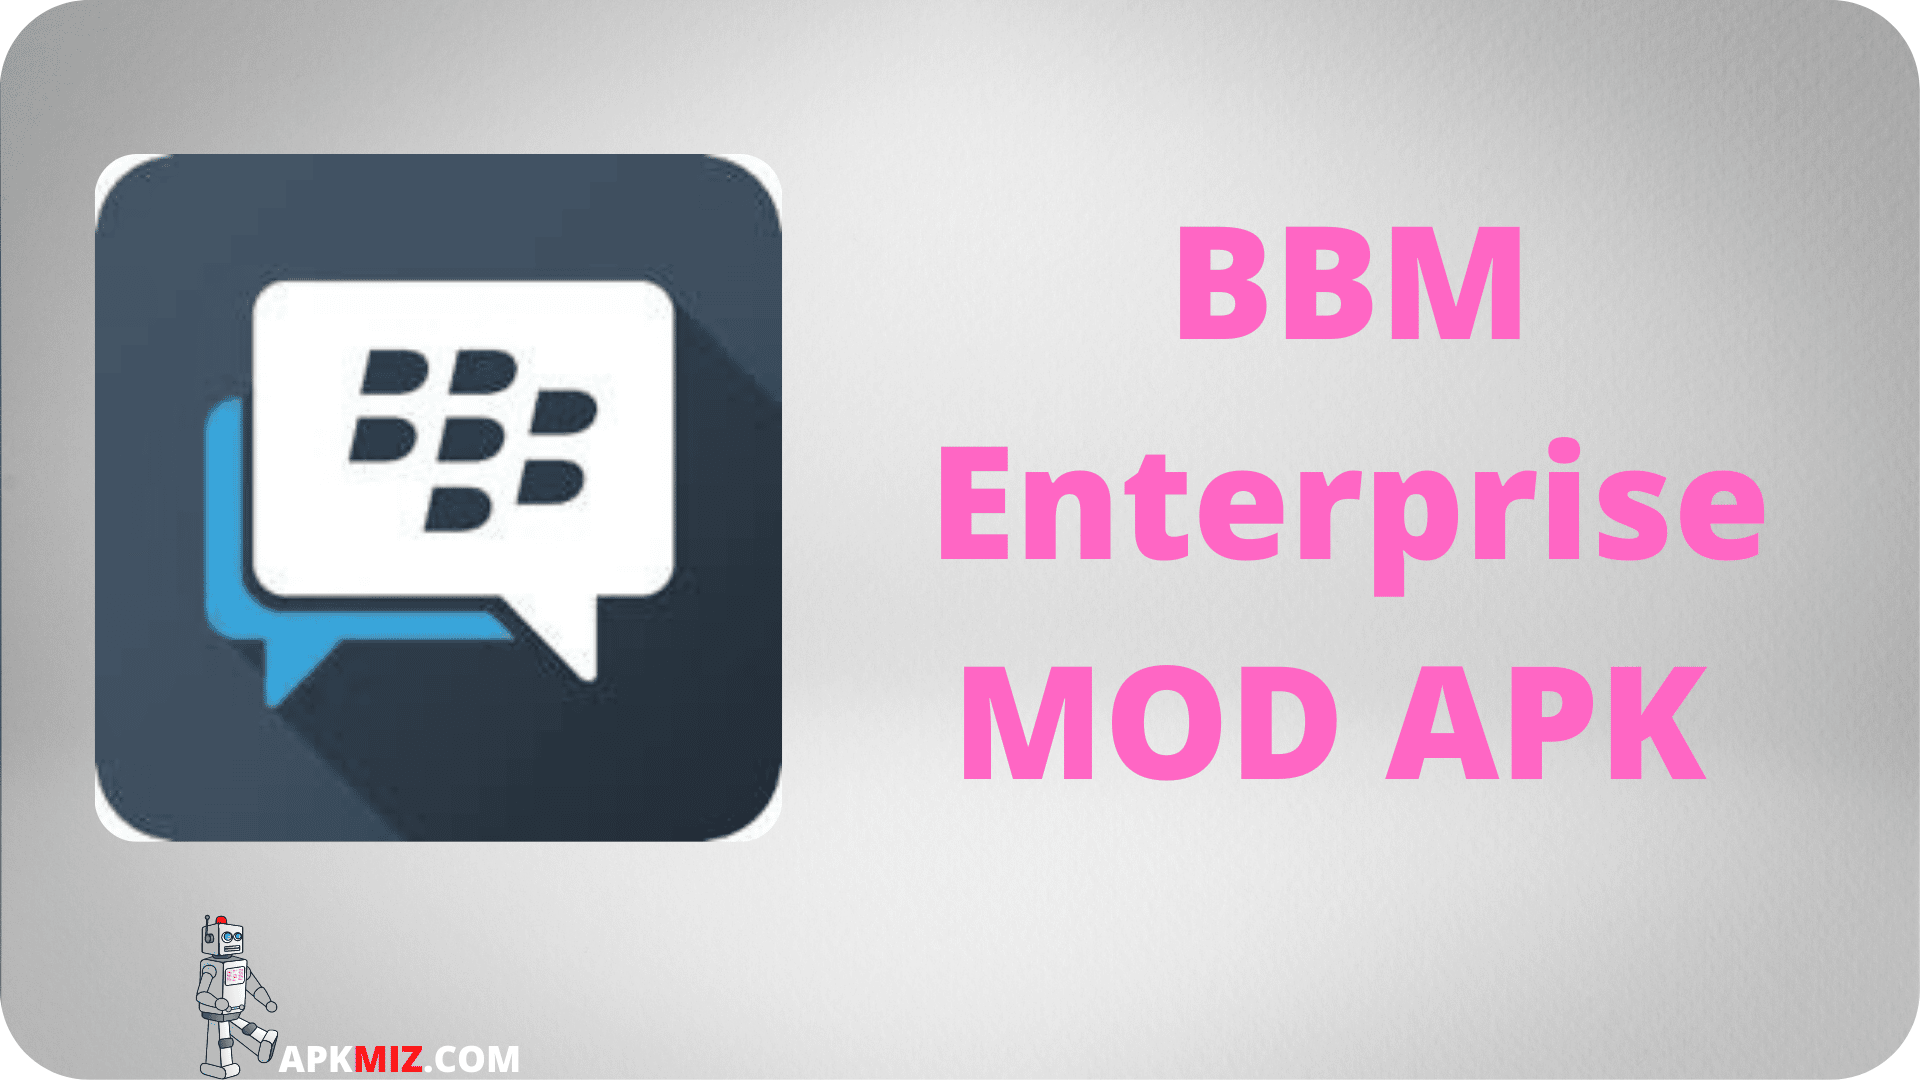 BBM Enterprise Mod Apk